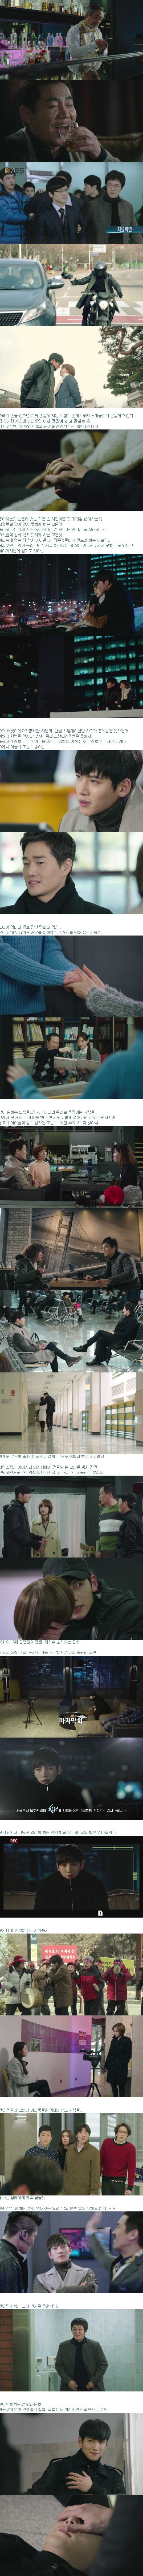 final episode 20 captures for the Korean drama 'Healer'